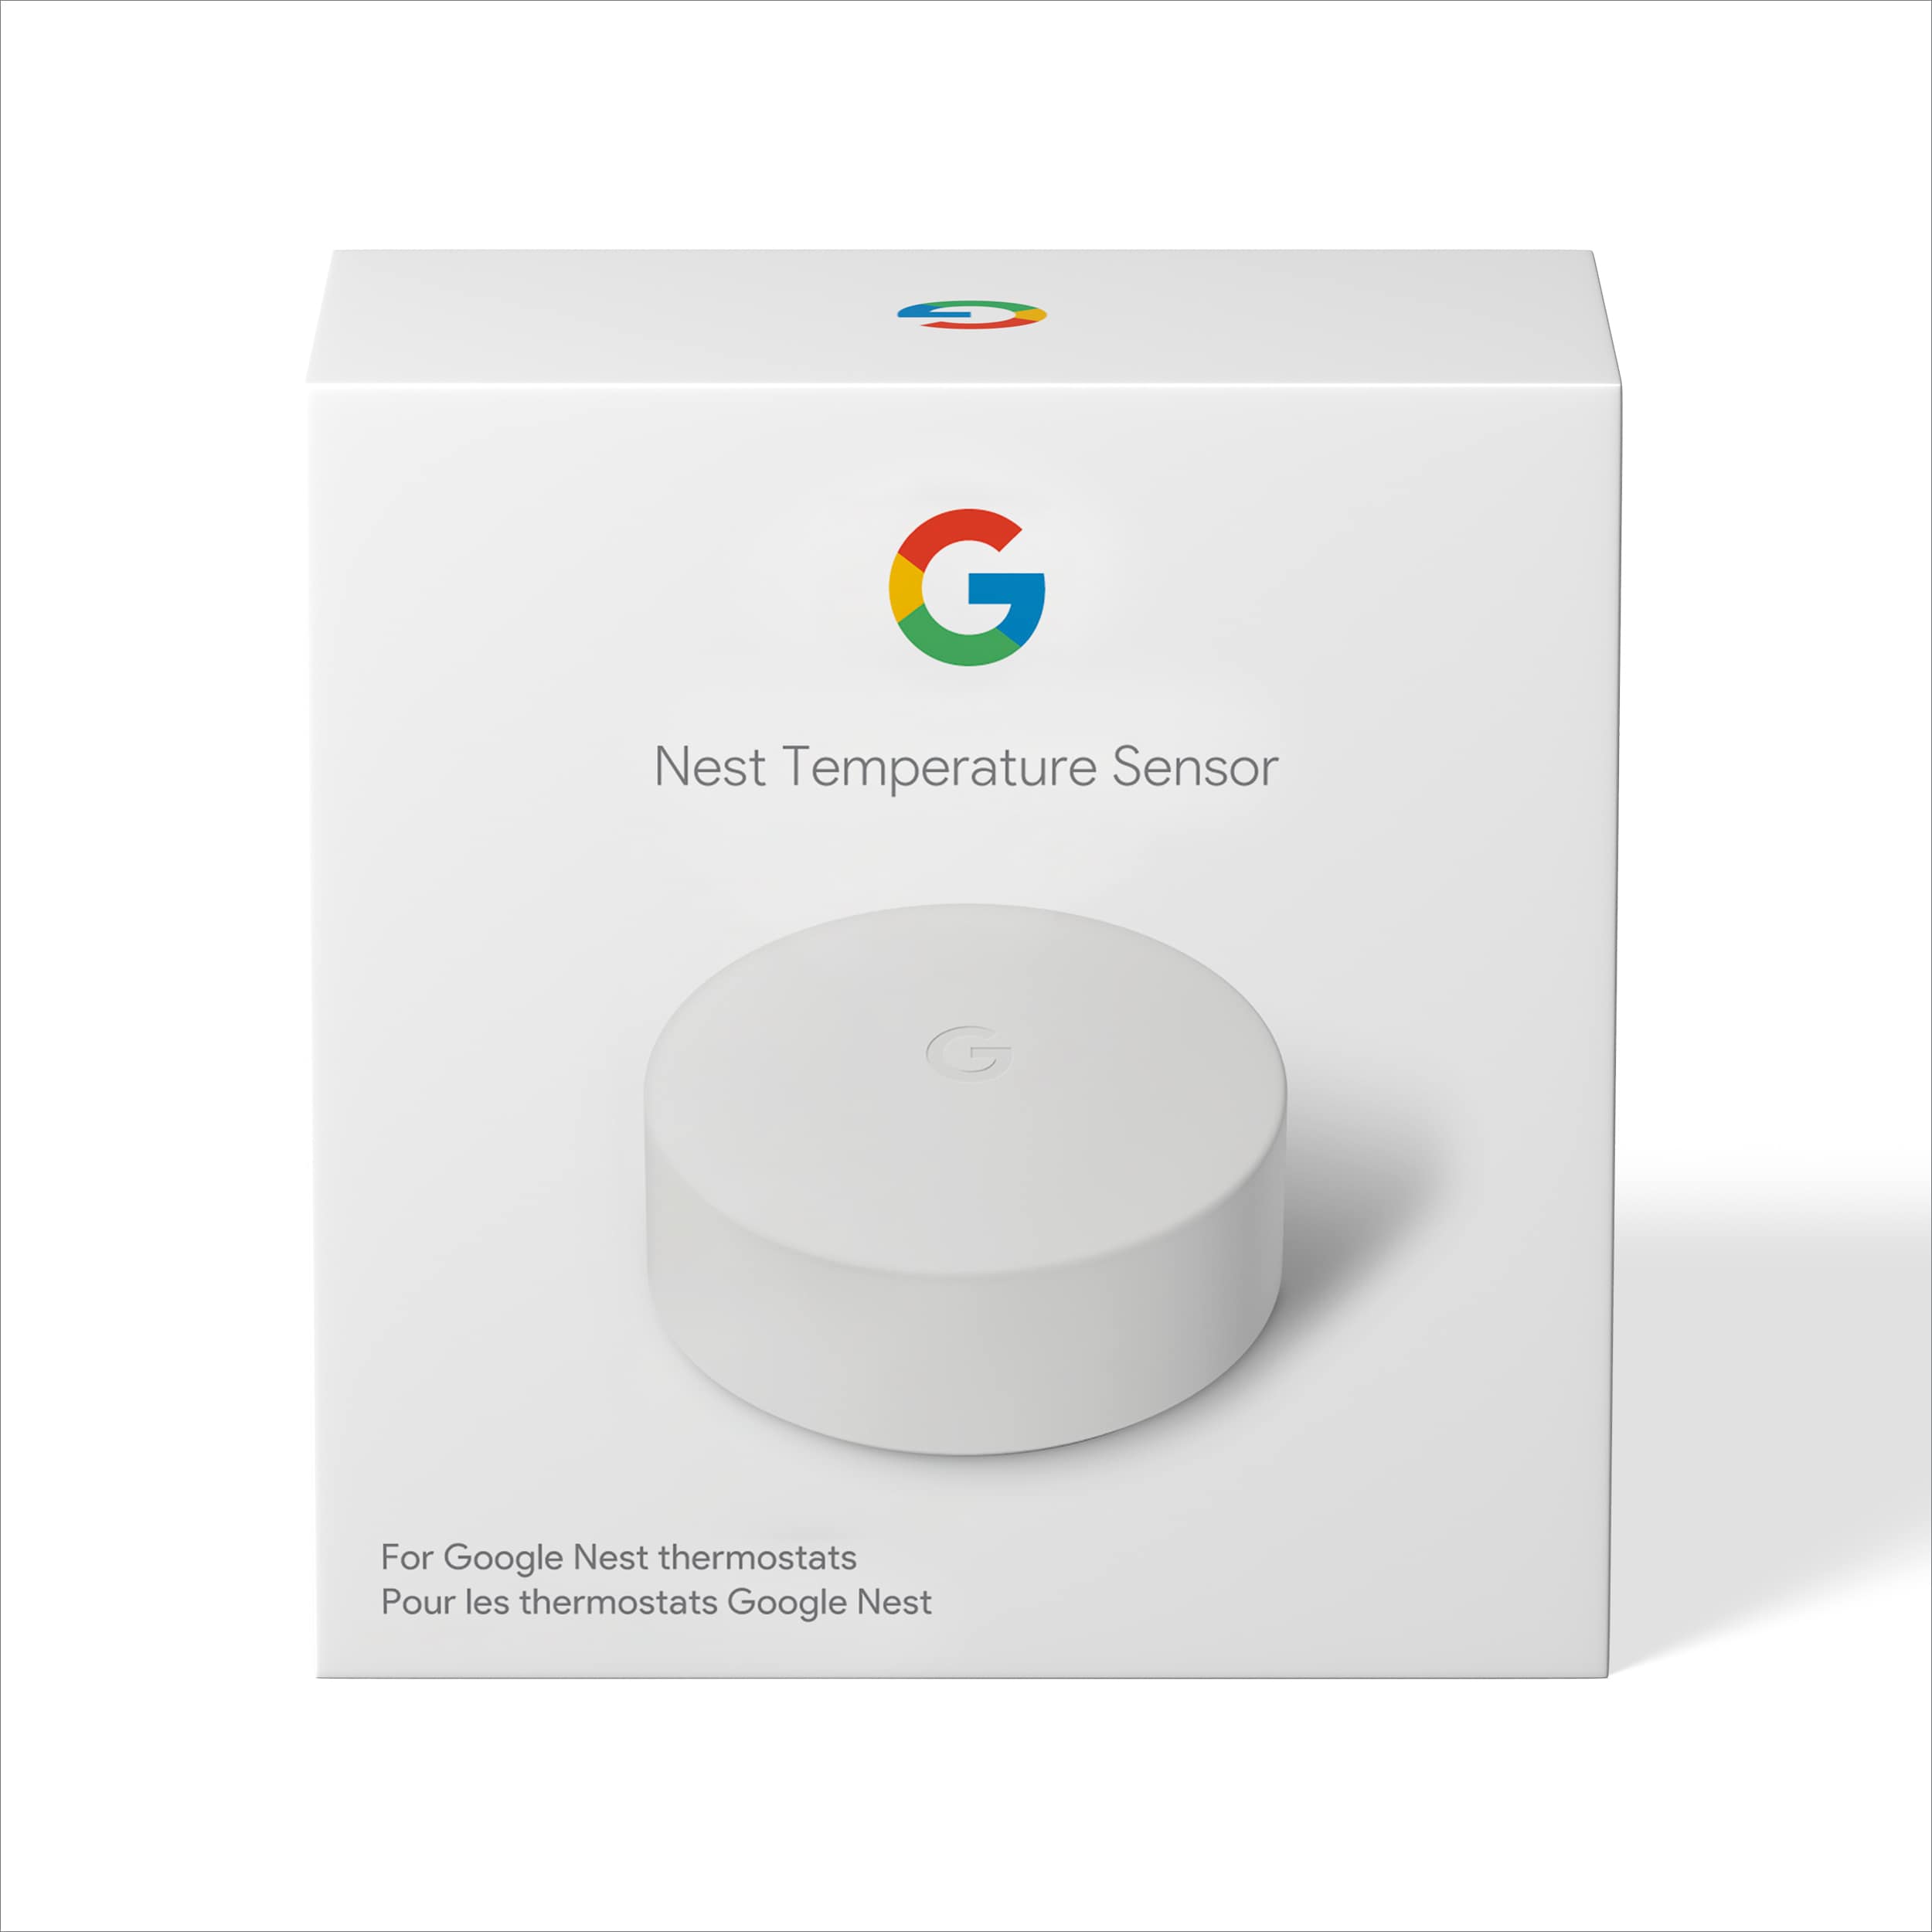 Learn about the Nest Temperature Sensor - Google Nest Help